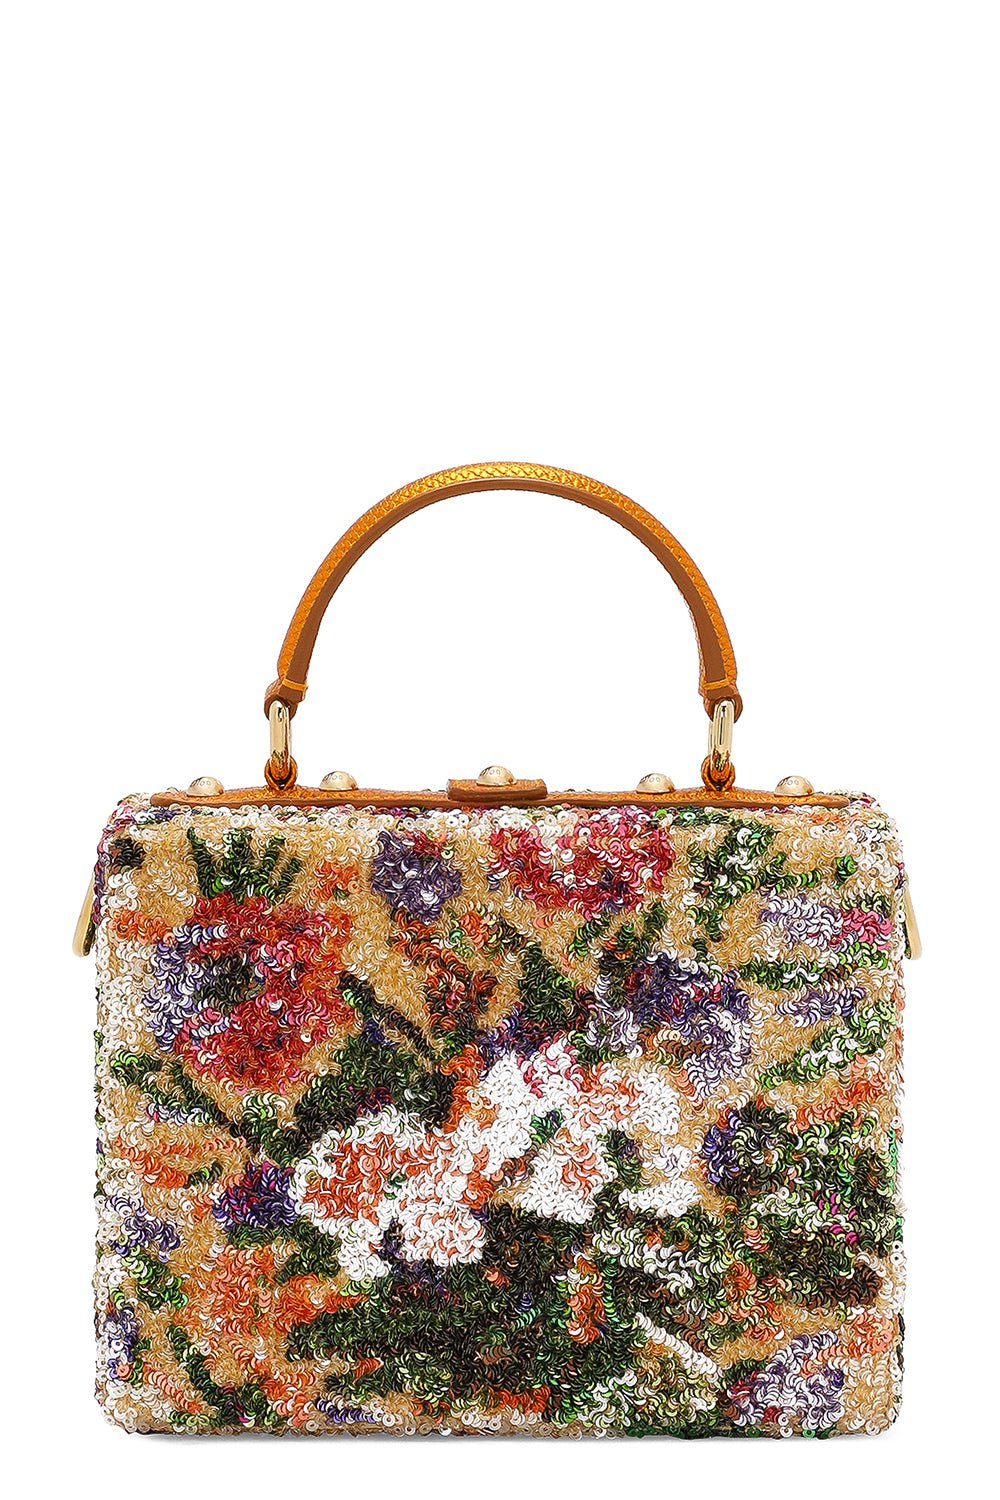 DOLCE & GABBANA-Beaded Floral Hard Box Bag-MULTI